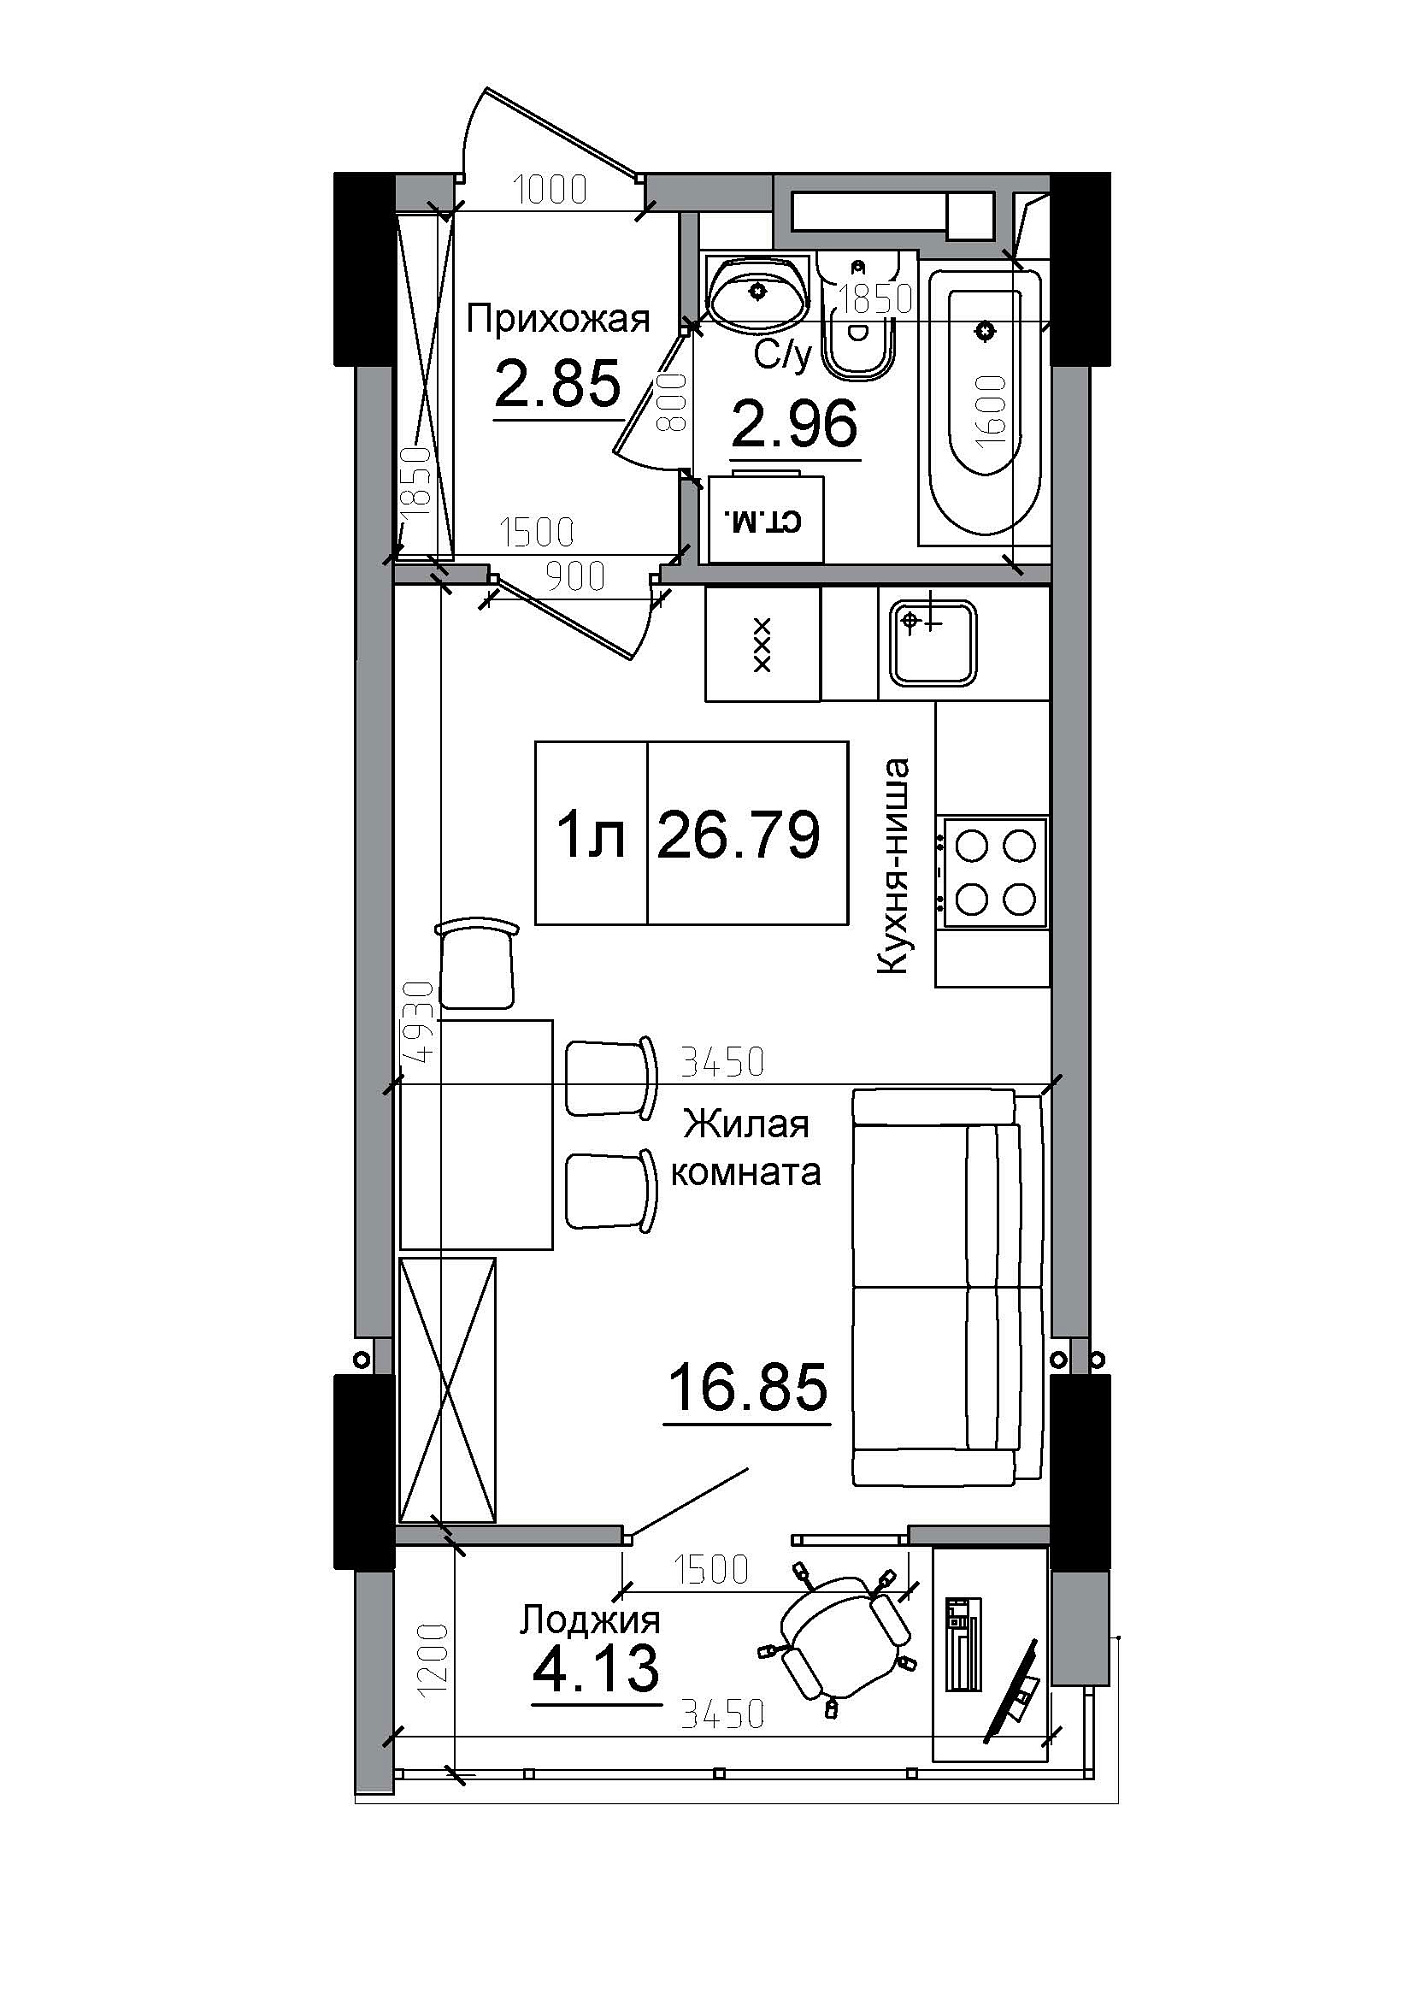 Планировка Smart-квартира площей 26.79м2, AB-12-09/00014.